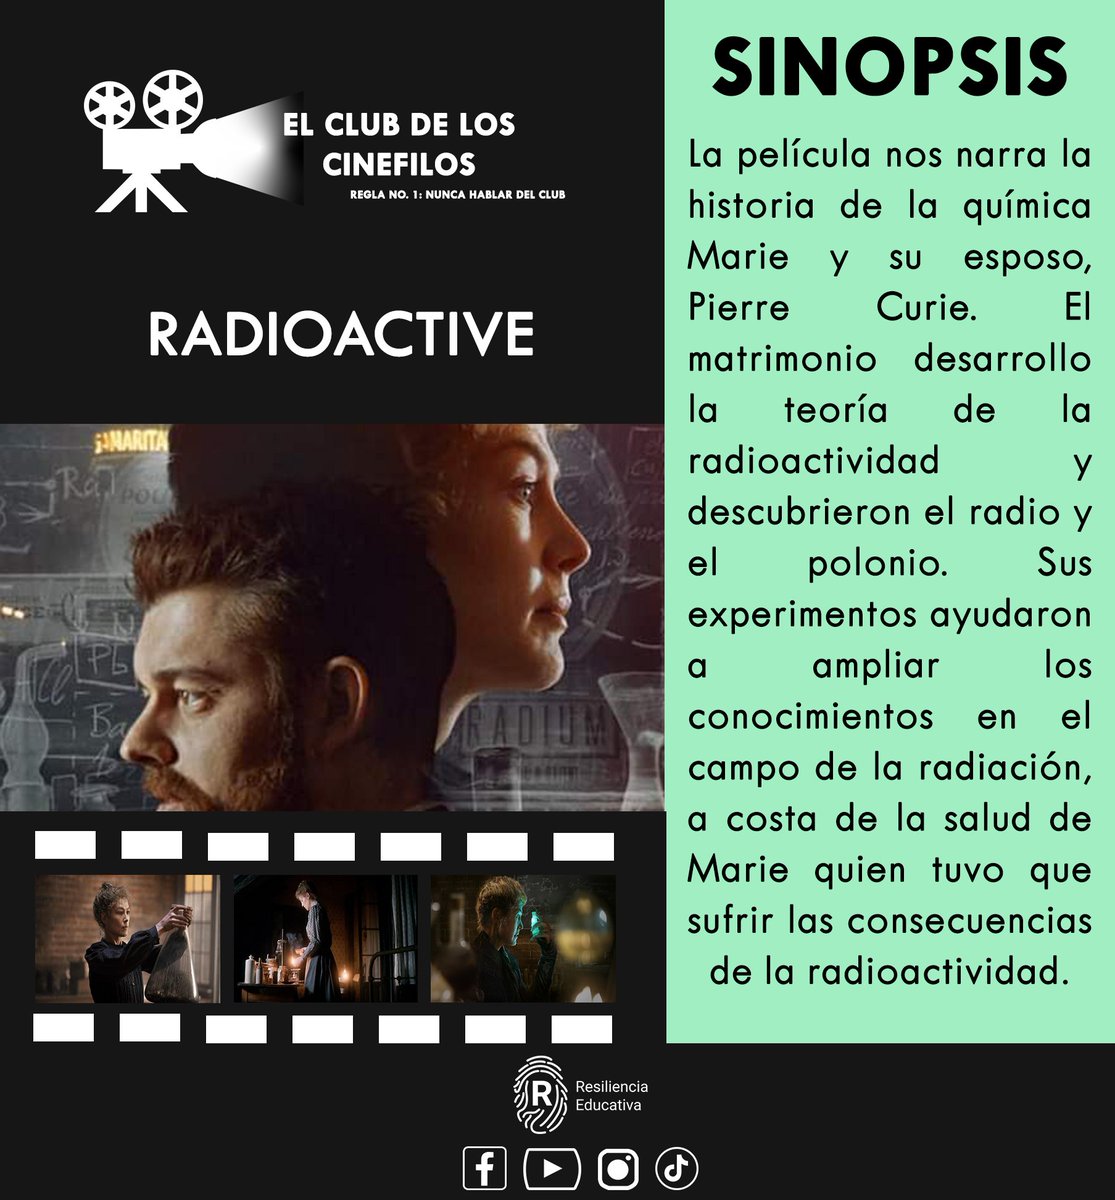 Radioactive

#radiacion #radioactividad #MarieCurie #quimica #experimentos #pelicula https://t.co/BwS6Lso69v